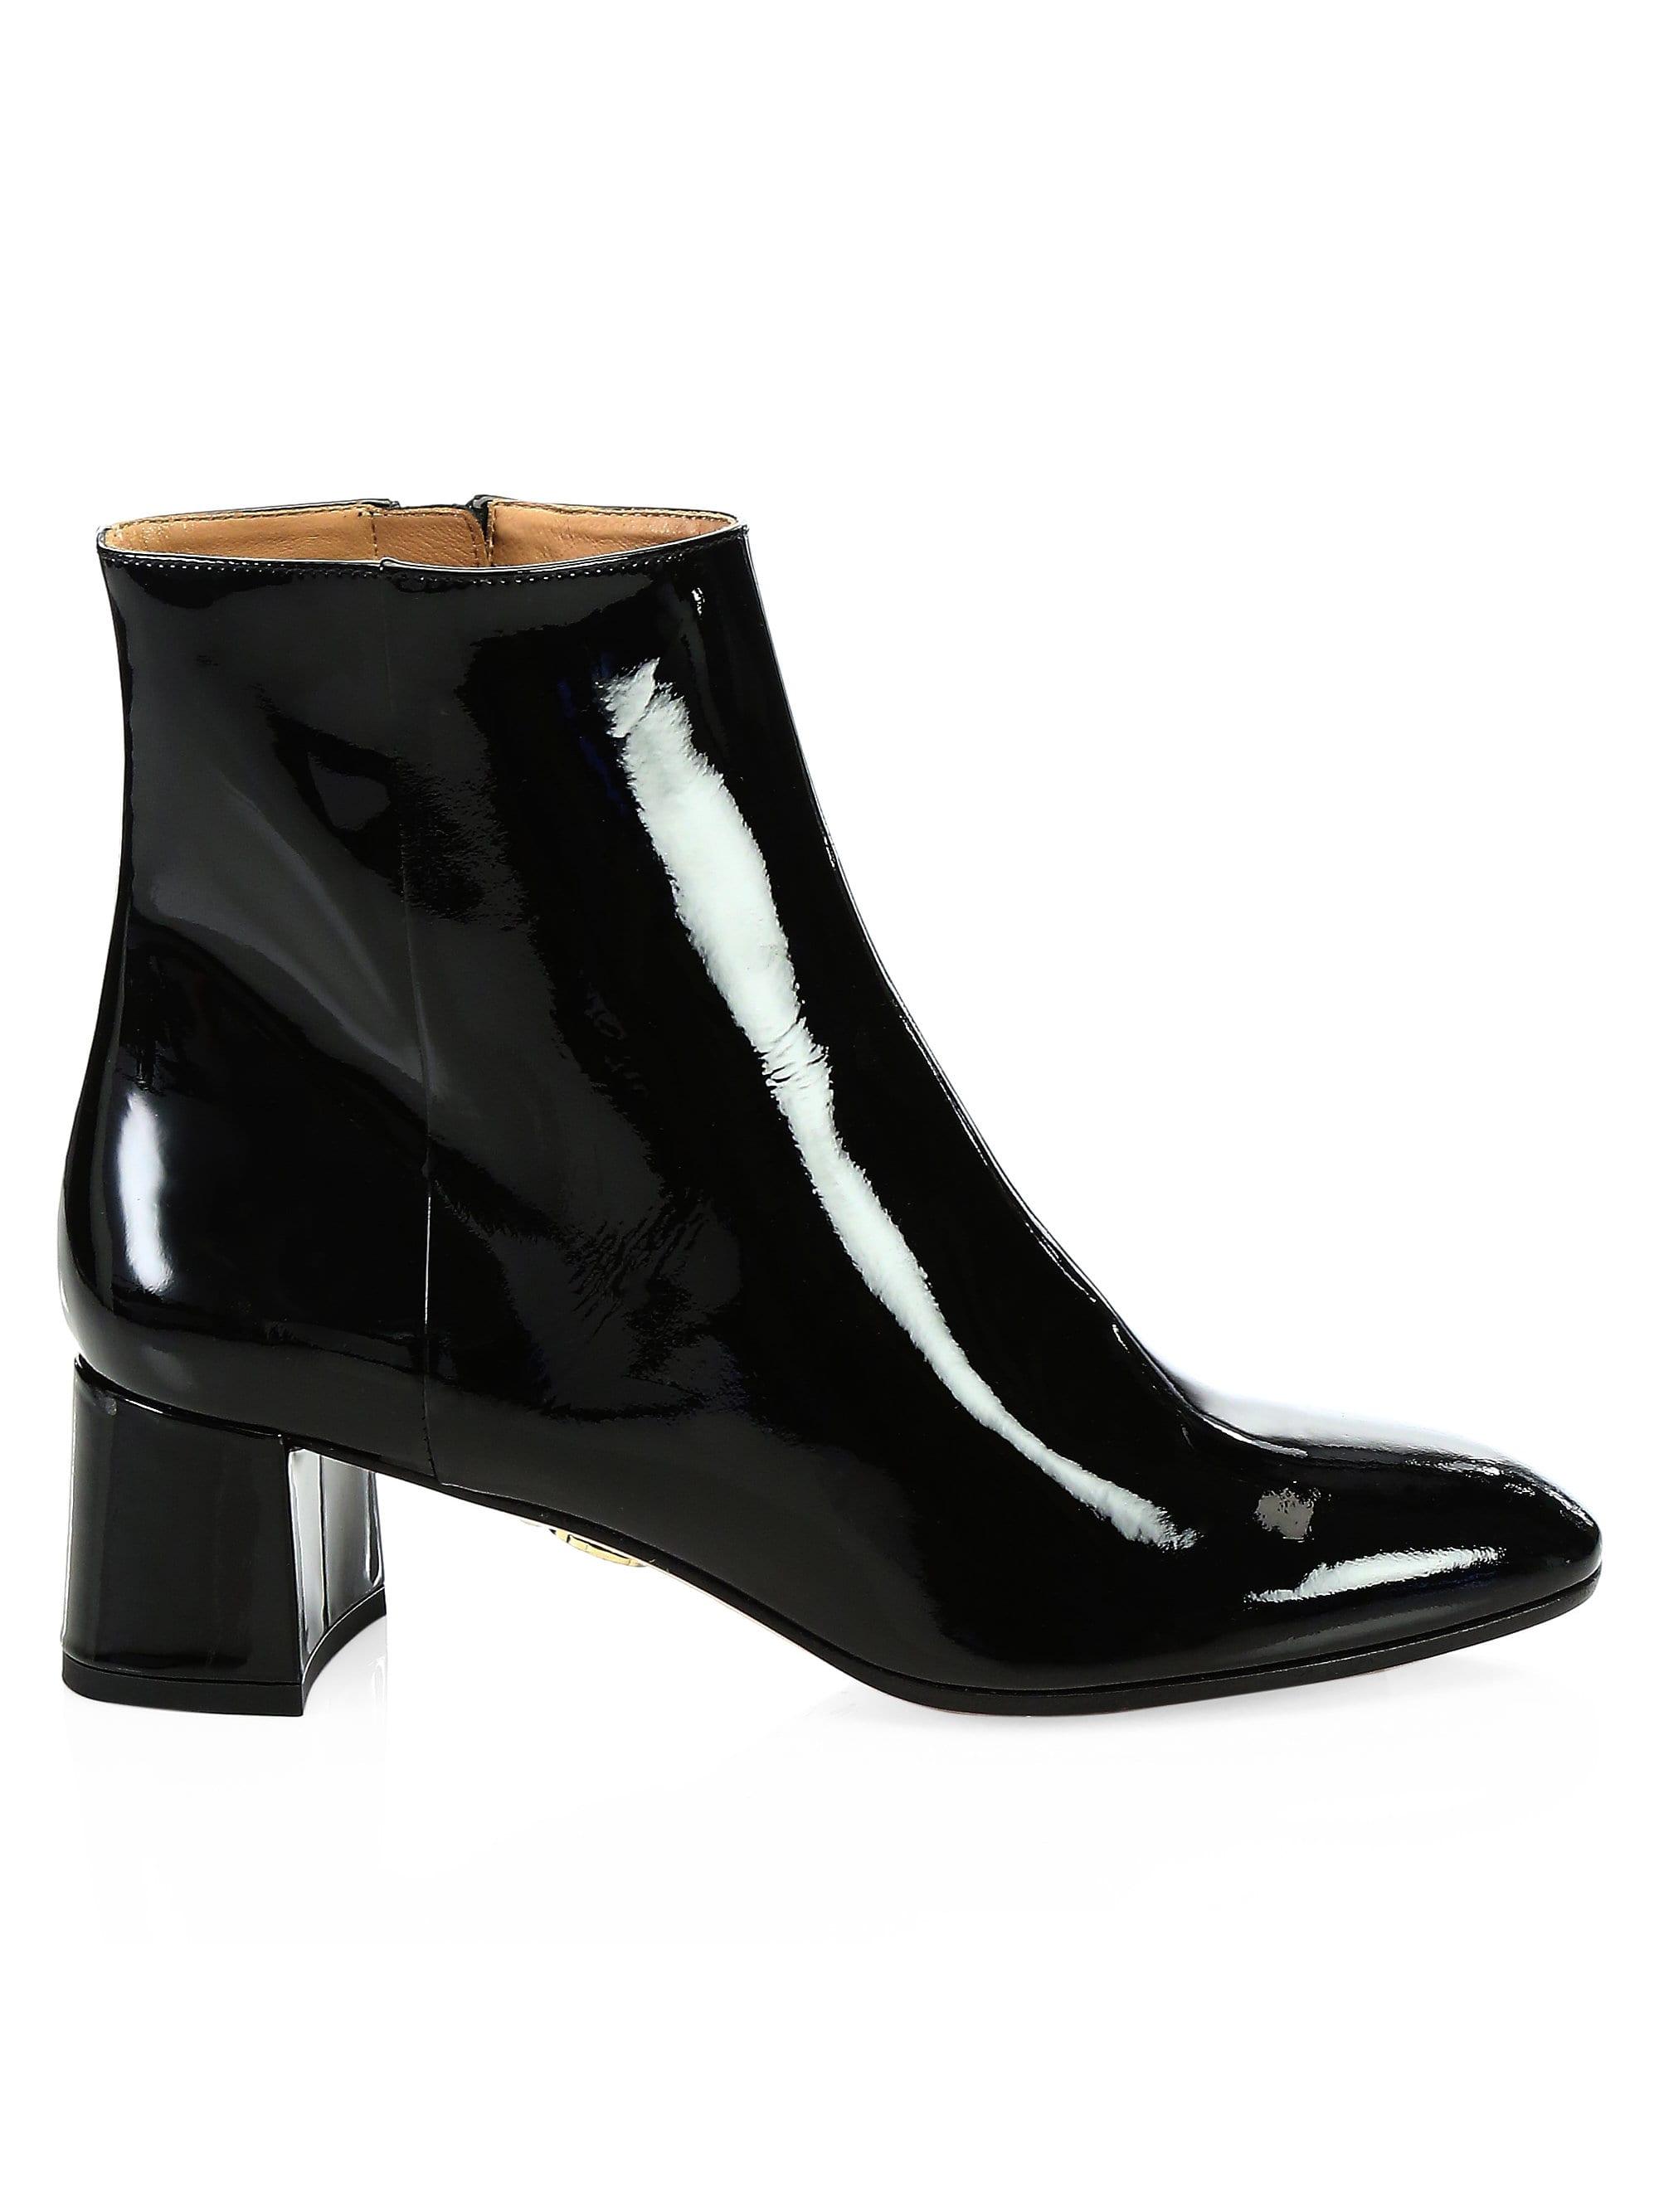 Aquazzura Women's Grenelle Patent Leather Ankle Boots - Black - Lyst